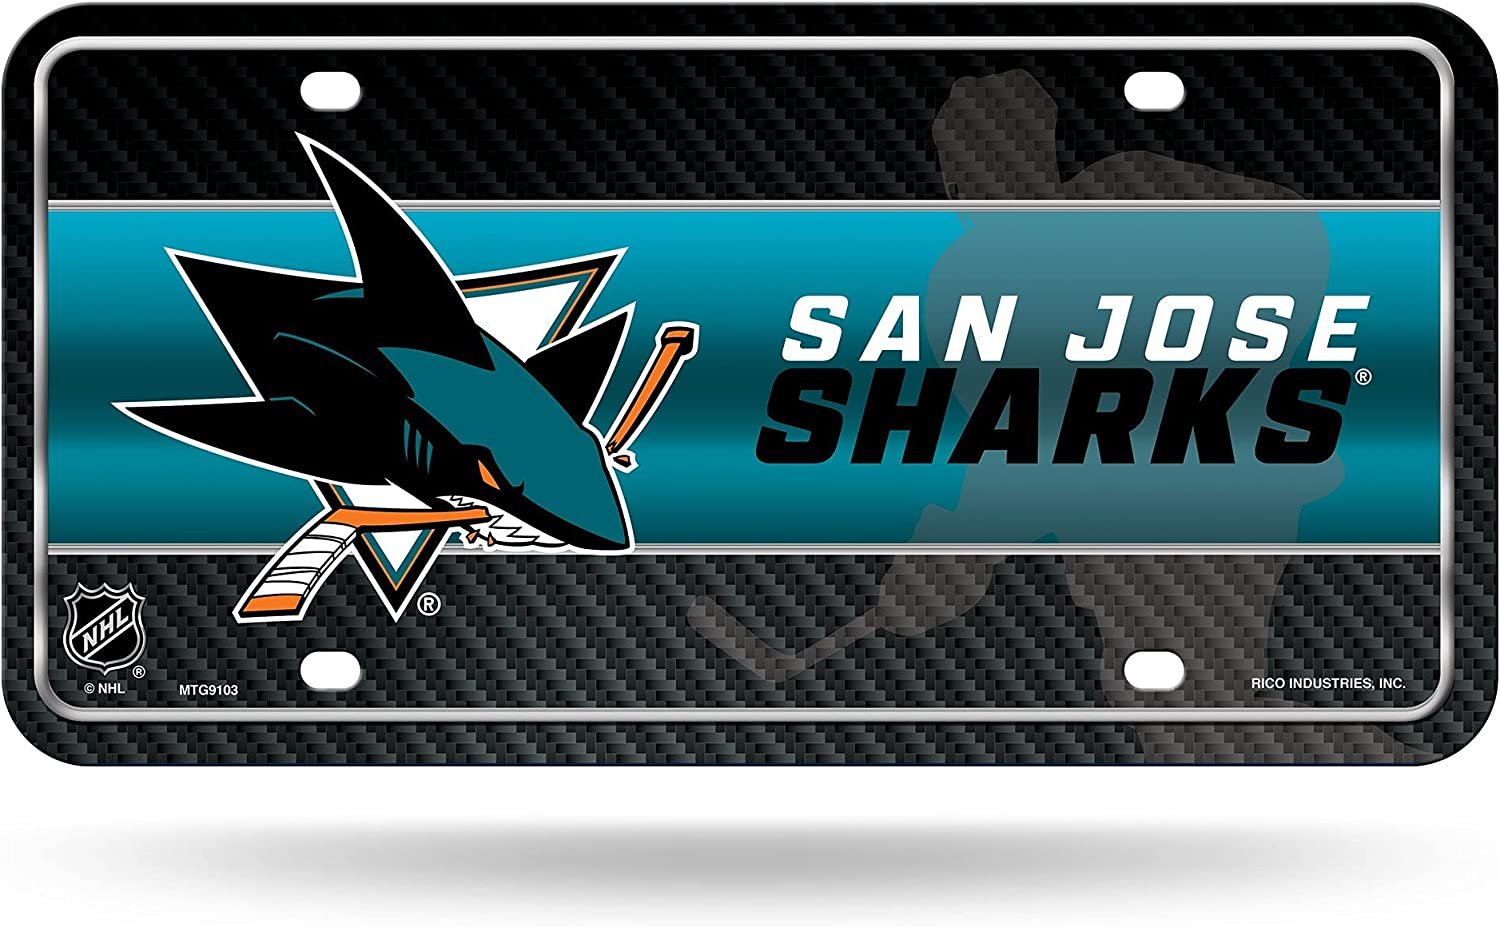 San Jose Sharks Metal License Plate Tag ALuminum Novelty 12x6 Inch City Design